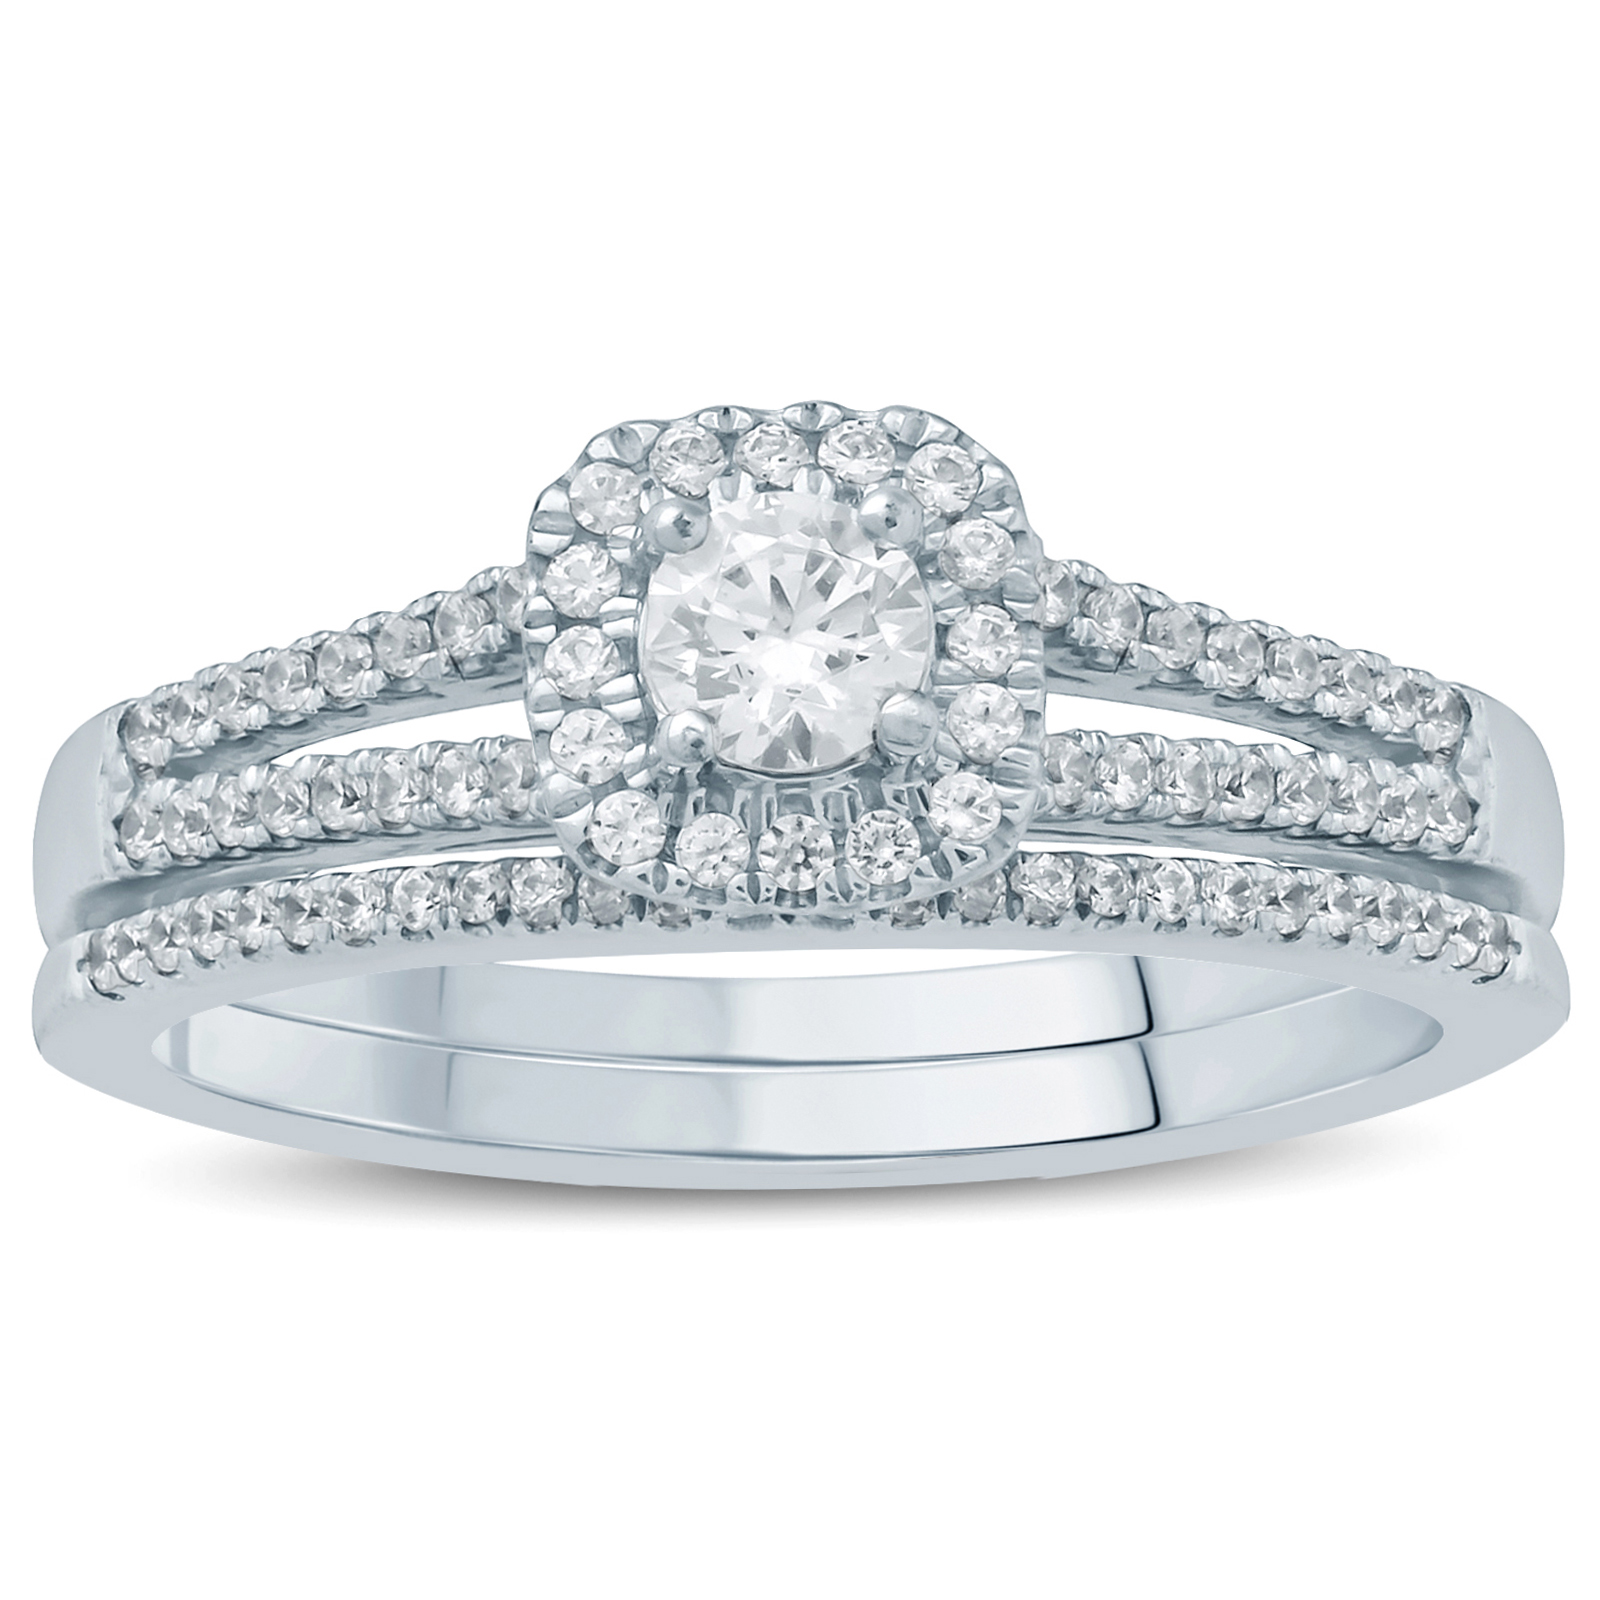 1/2 Carat TW Diamond Halo Bridal Set in 10k White Gold